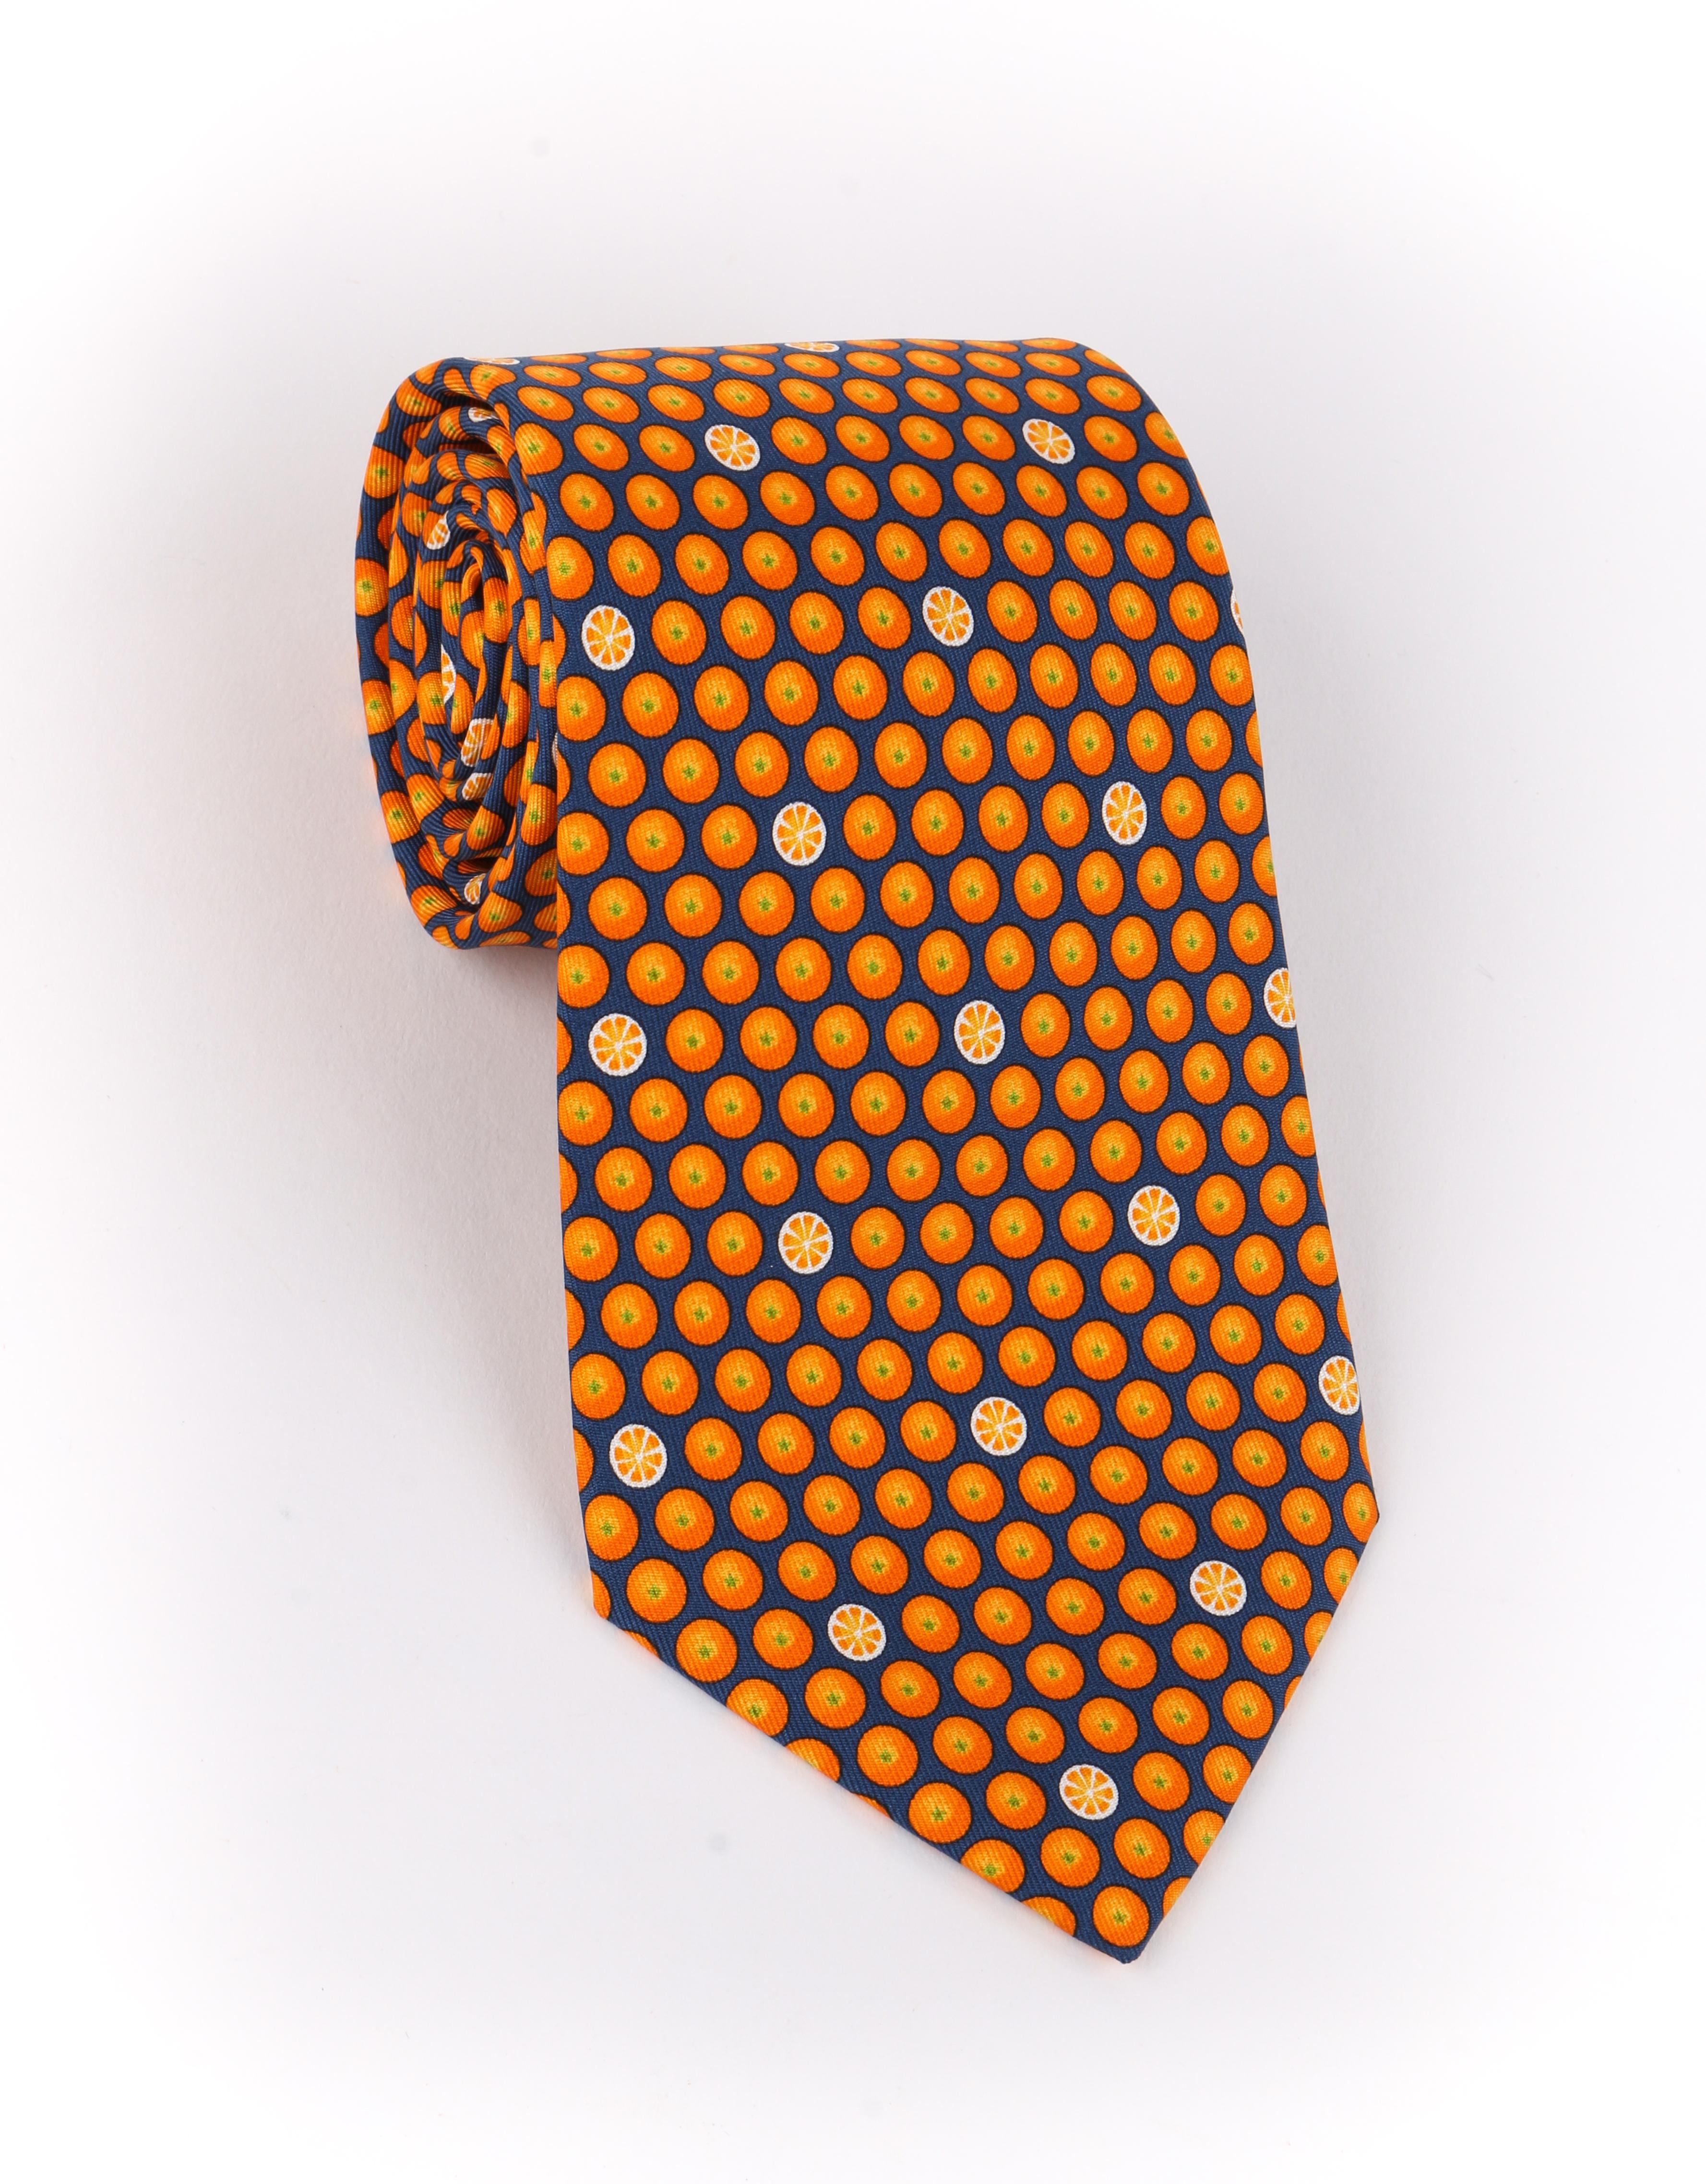 DESCRIPTION: HERMES Navy Blue & Orange Fruit Polka Dot Print 5 Fold Silk Necktie Tie 5300 TA
 
Brand / Manufacturer: Hermes
Collection: 
Designer: 
Manufacturer Style Name: 
Style: 5 fold necktie
Color(s): Multi in shades of navy blue, orange, and